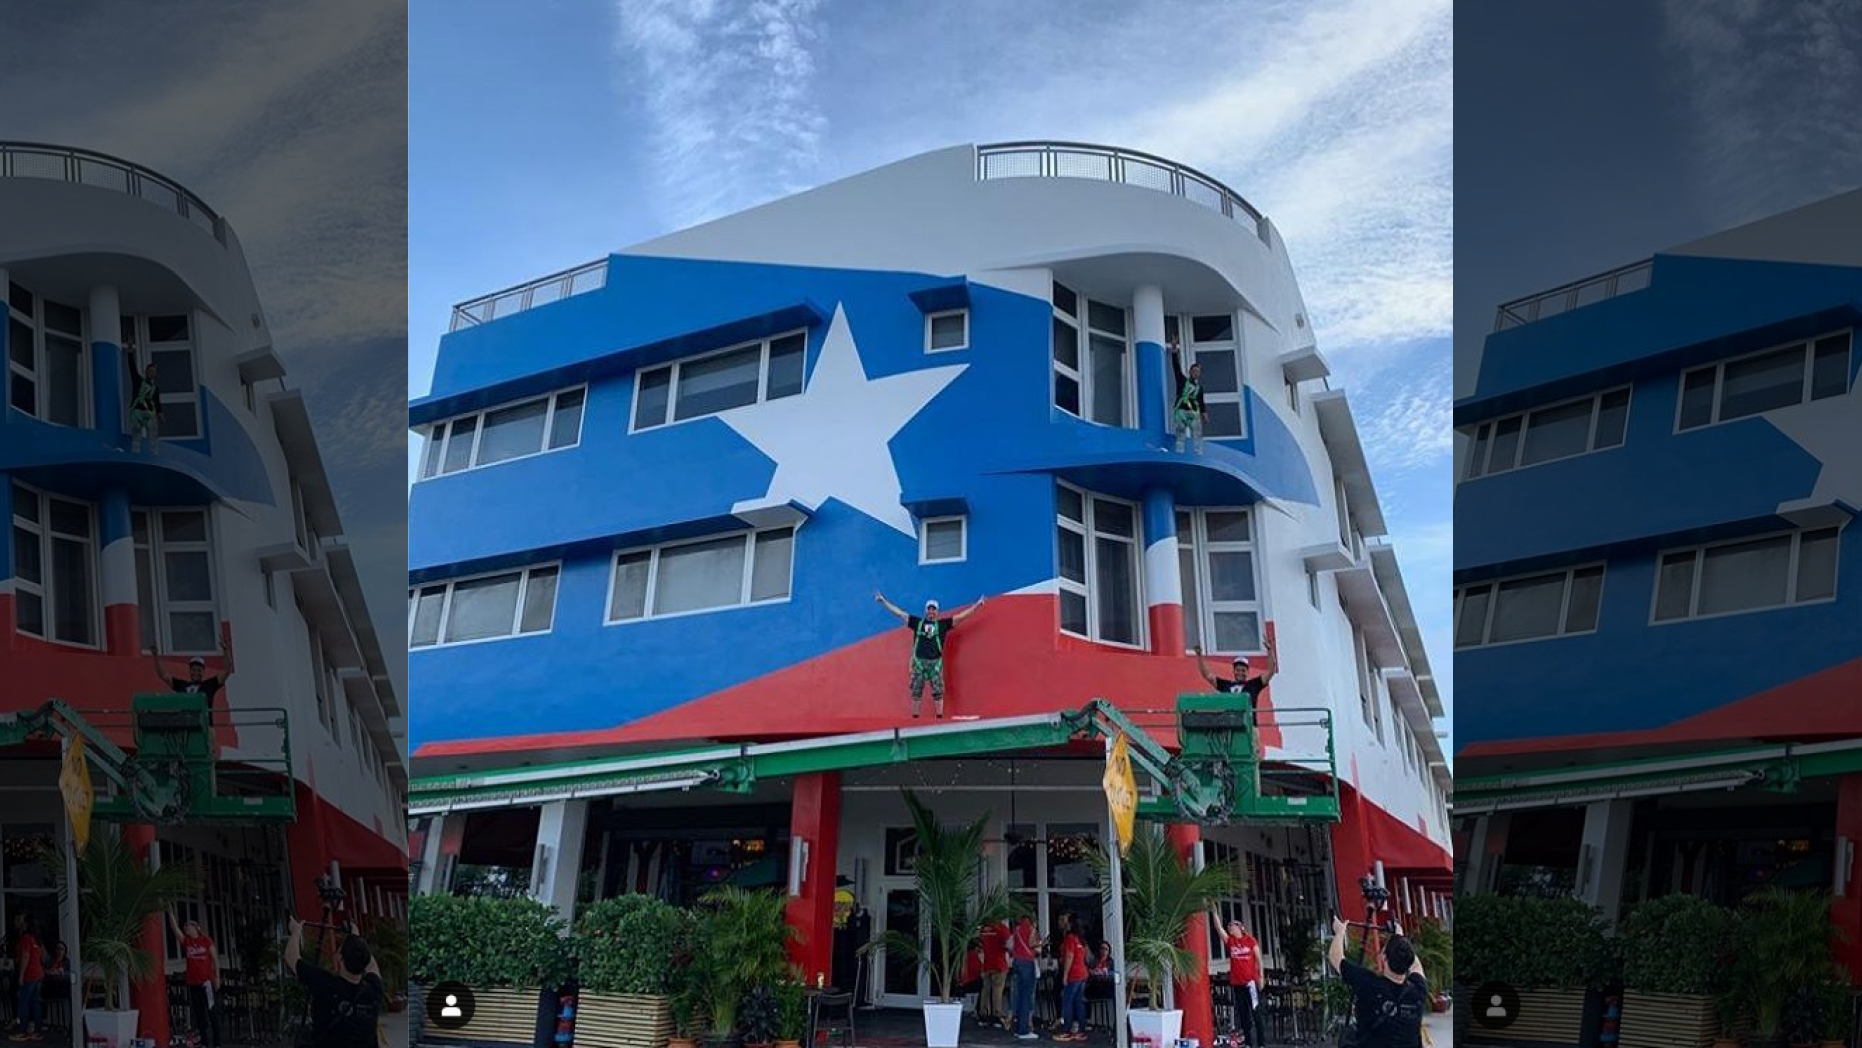 Ordenan deshacer mural de famoso artista con bandera de Puerto Rico en Miami